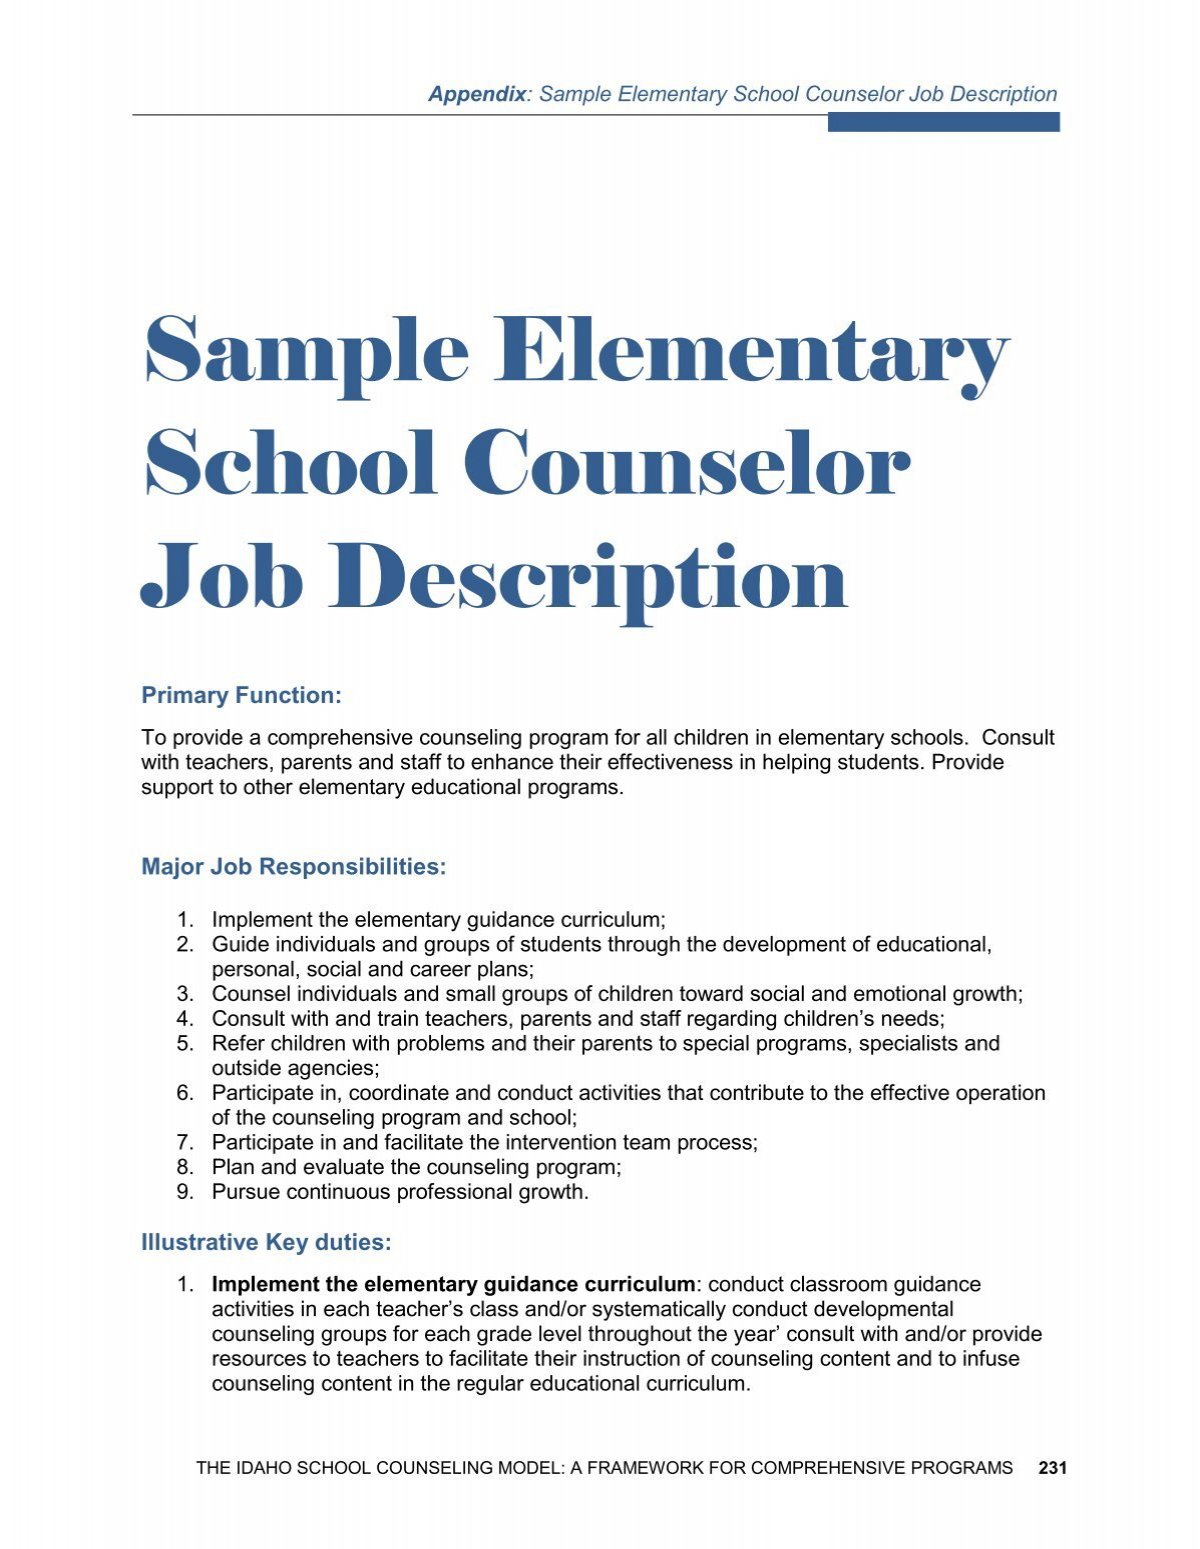 sample-elementary-school-counselor-job-description-idaho